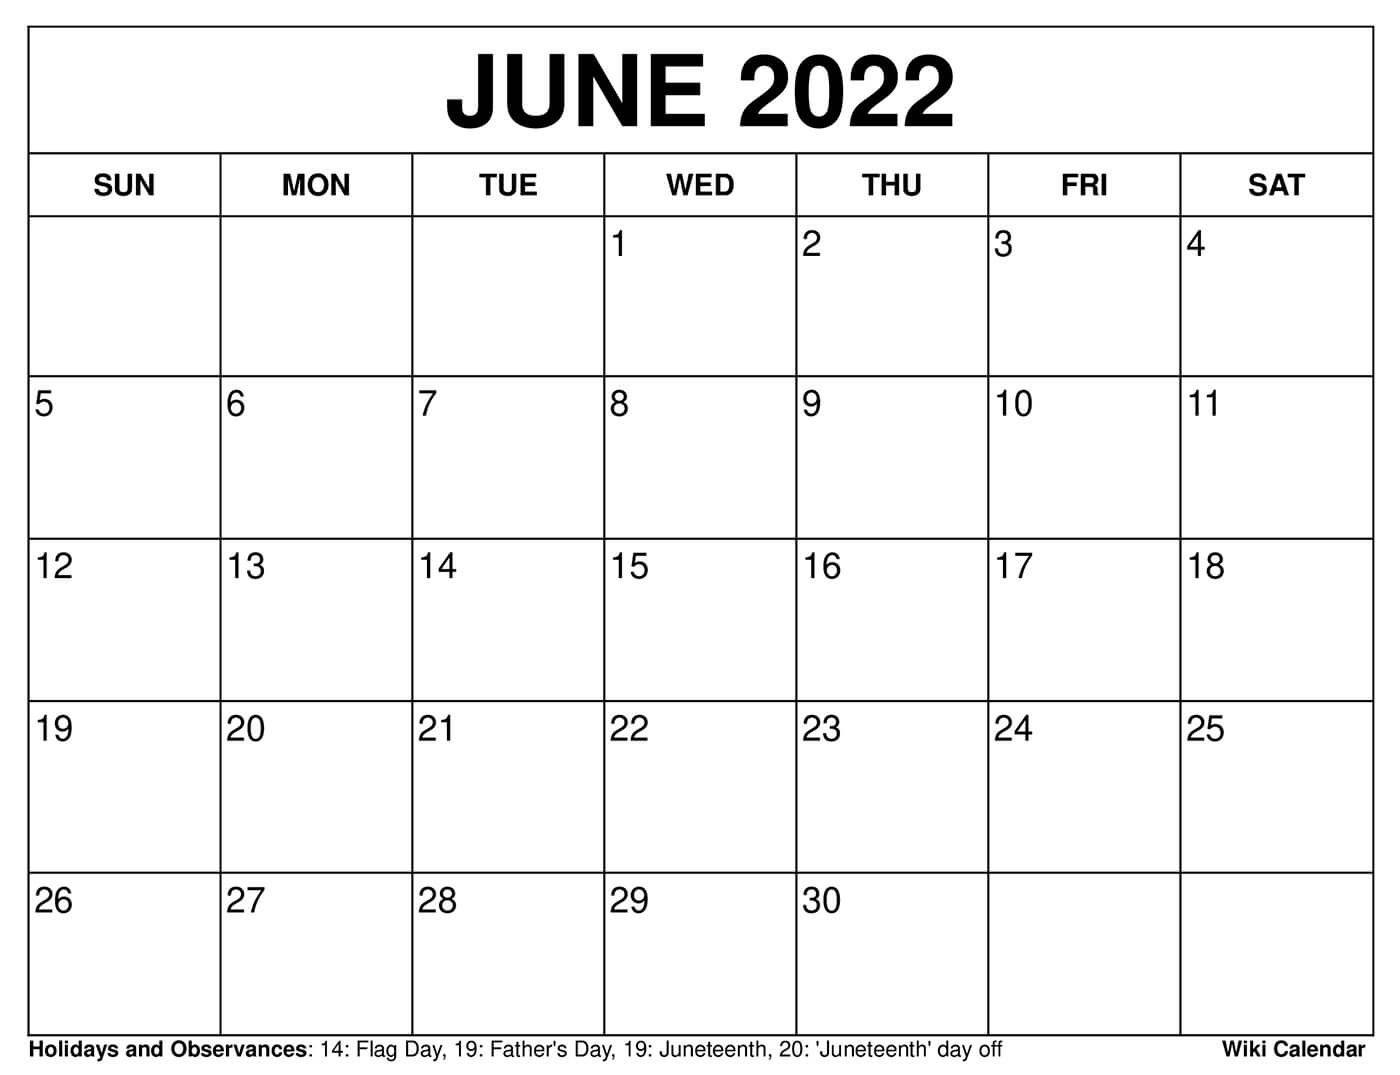 June 2022 Calendar To Print Free Printable June 2022 Calendars - Wiki Calendar